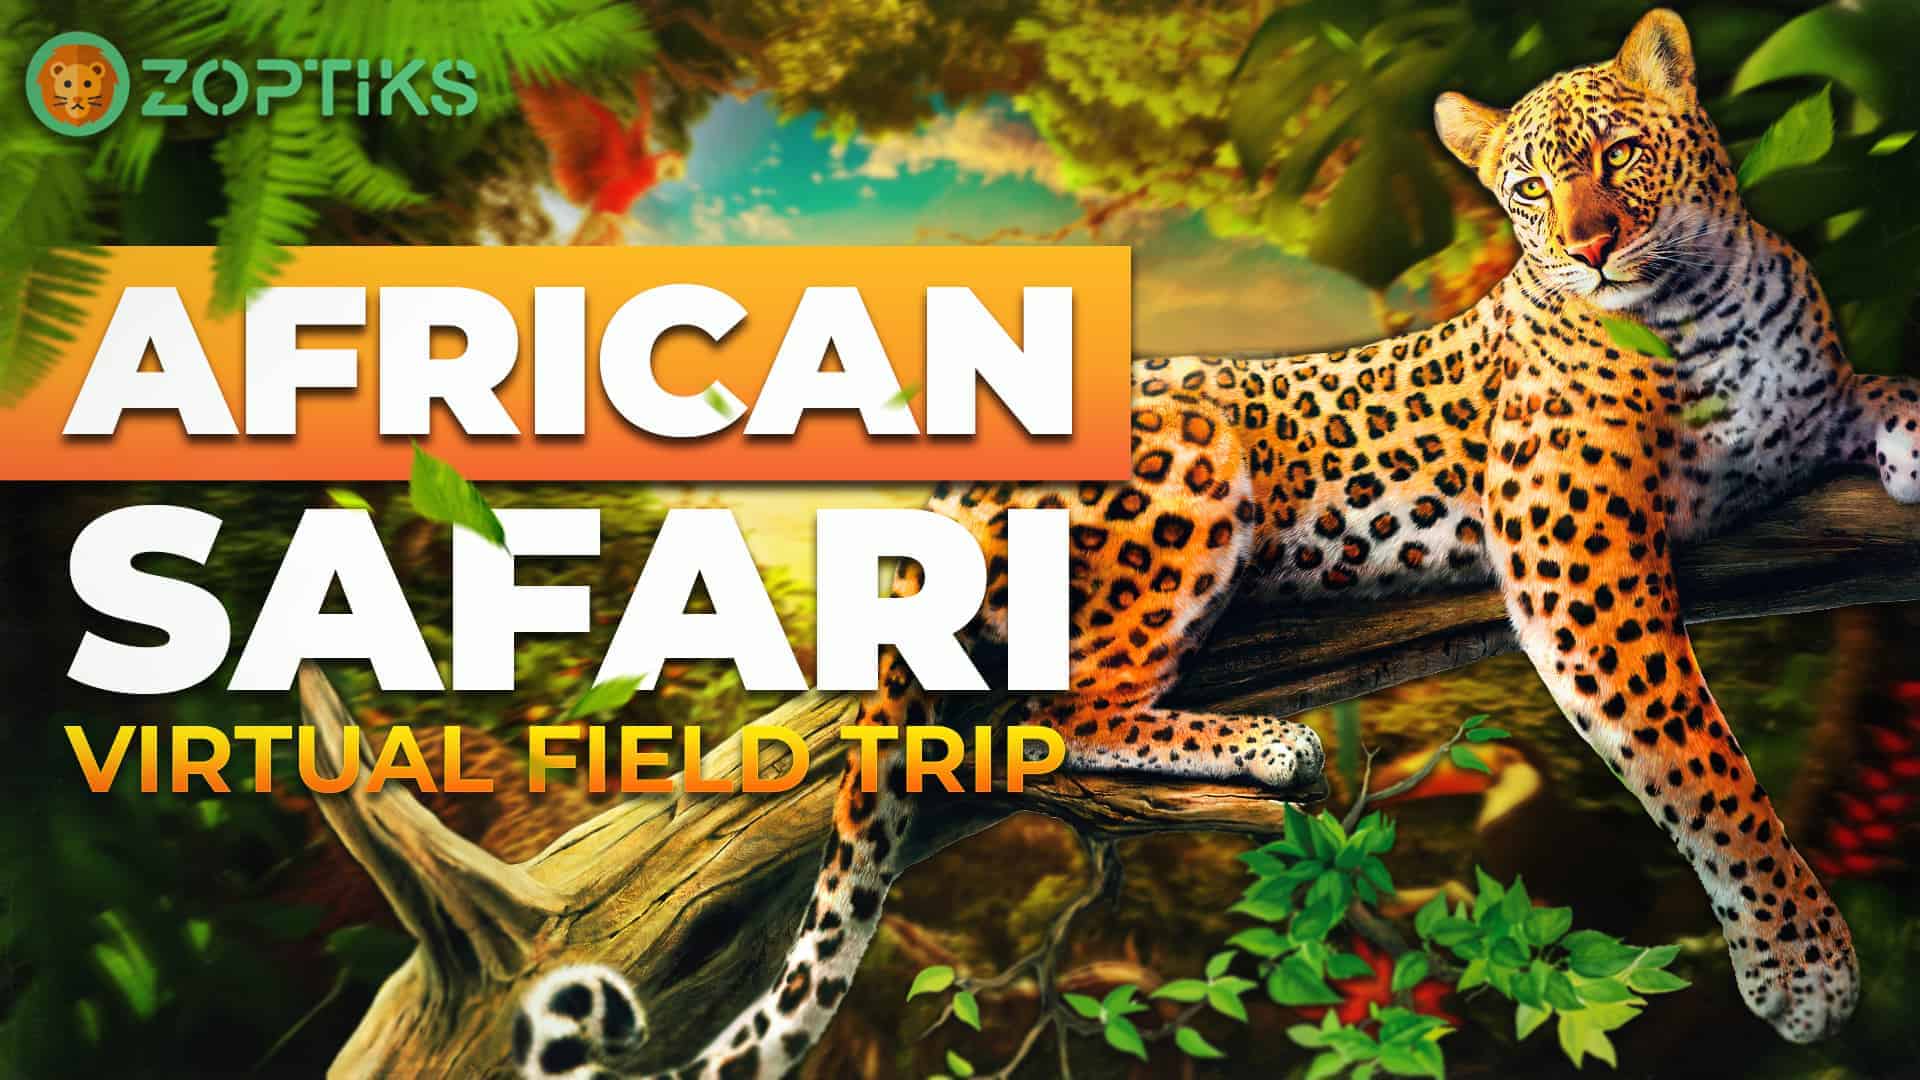 African safari virtual field trip 2